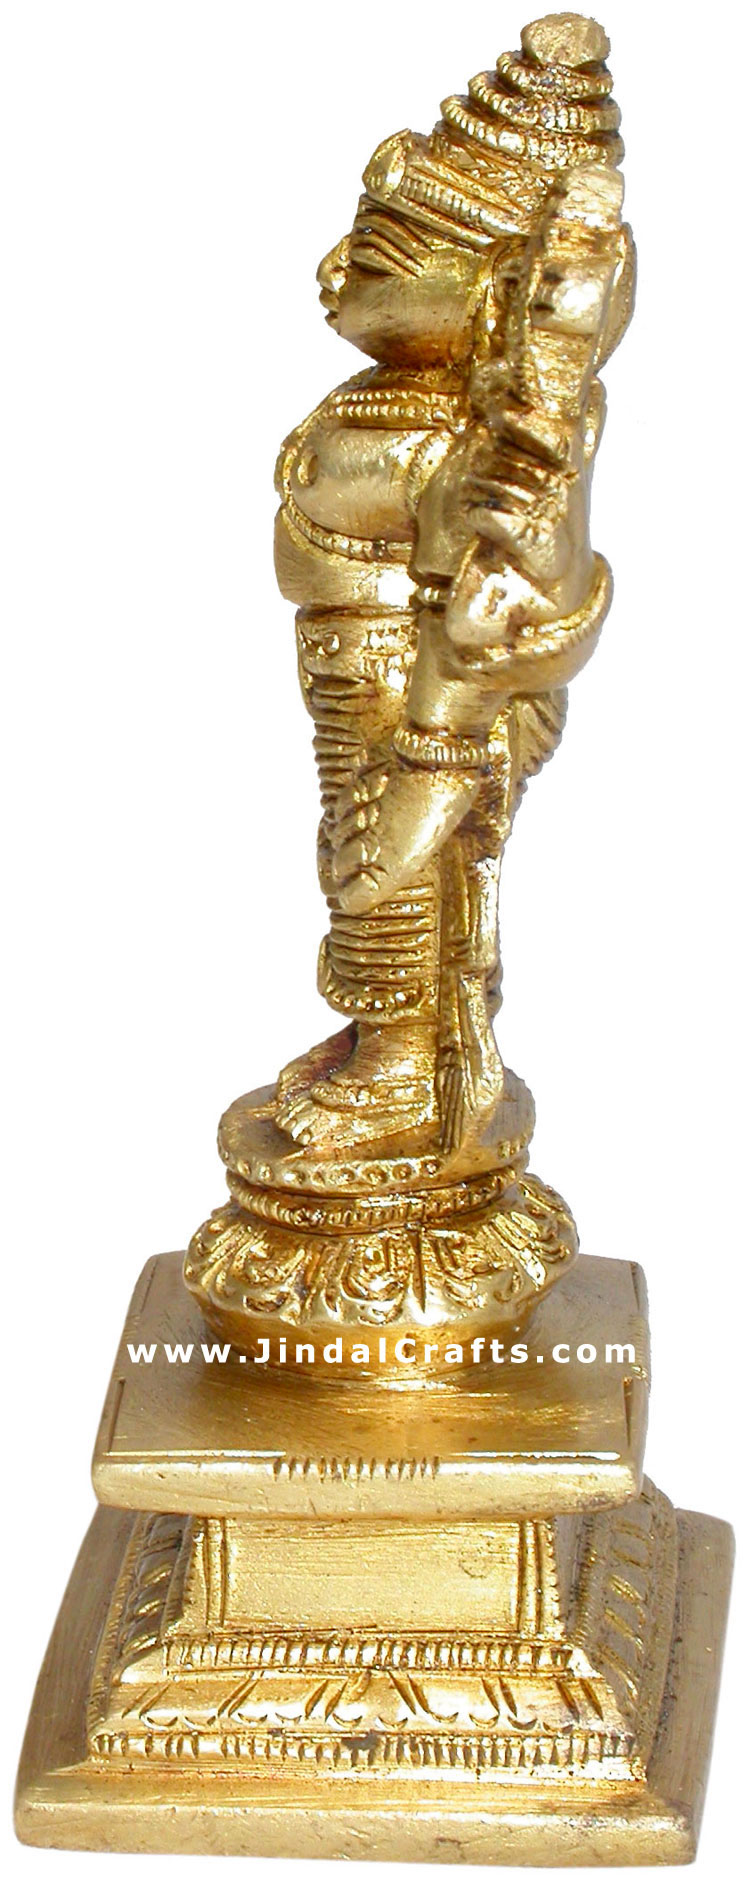 Vishnu - Indian God Figures Statues Handicrafts Art